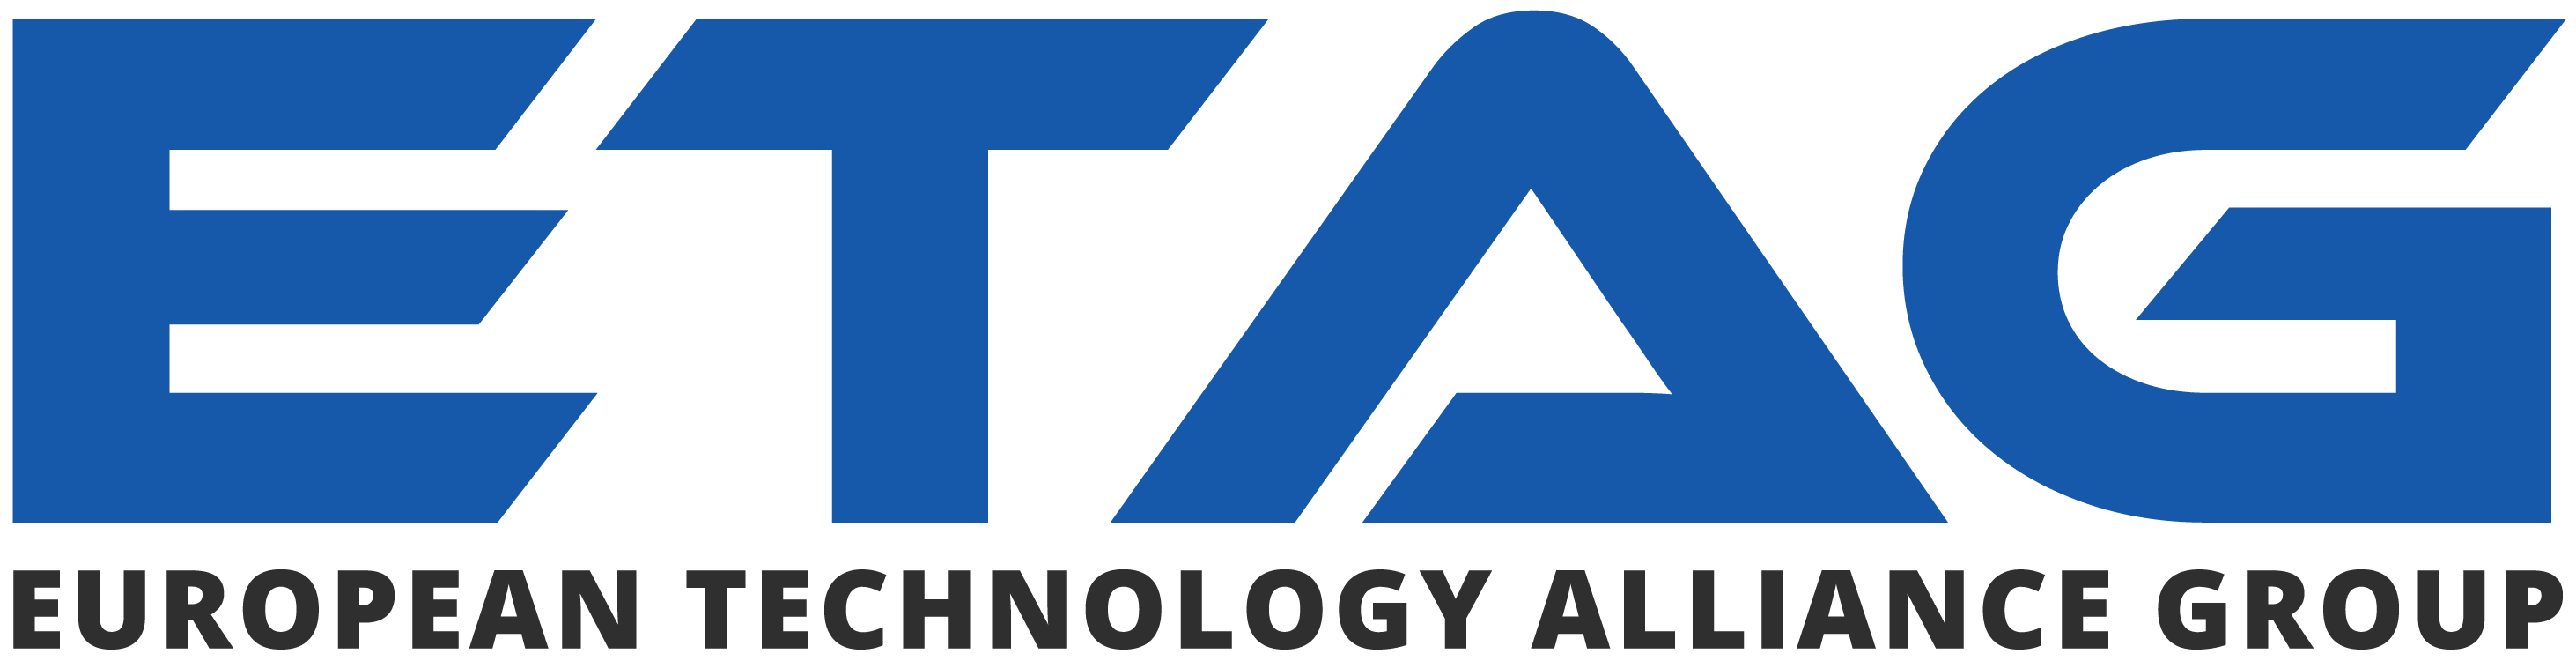 ETAG | European Technology Alliance Group